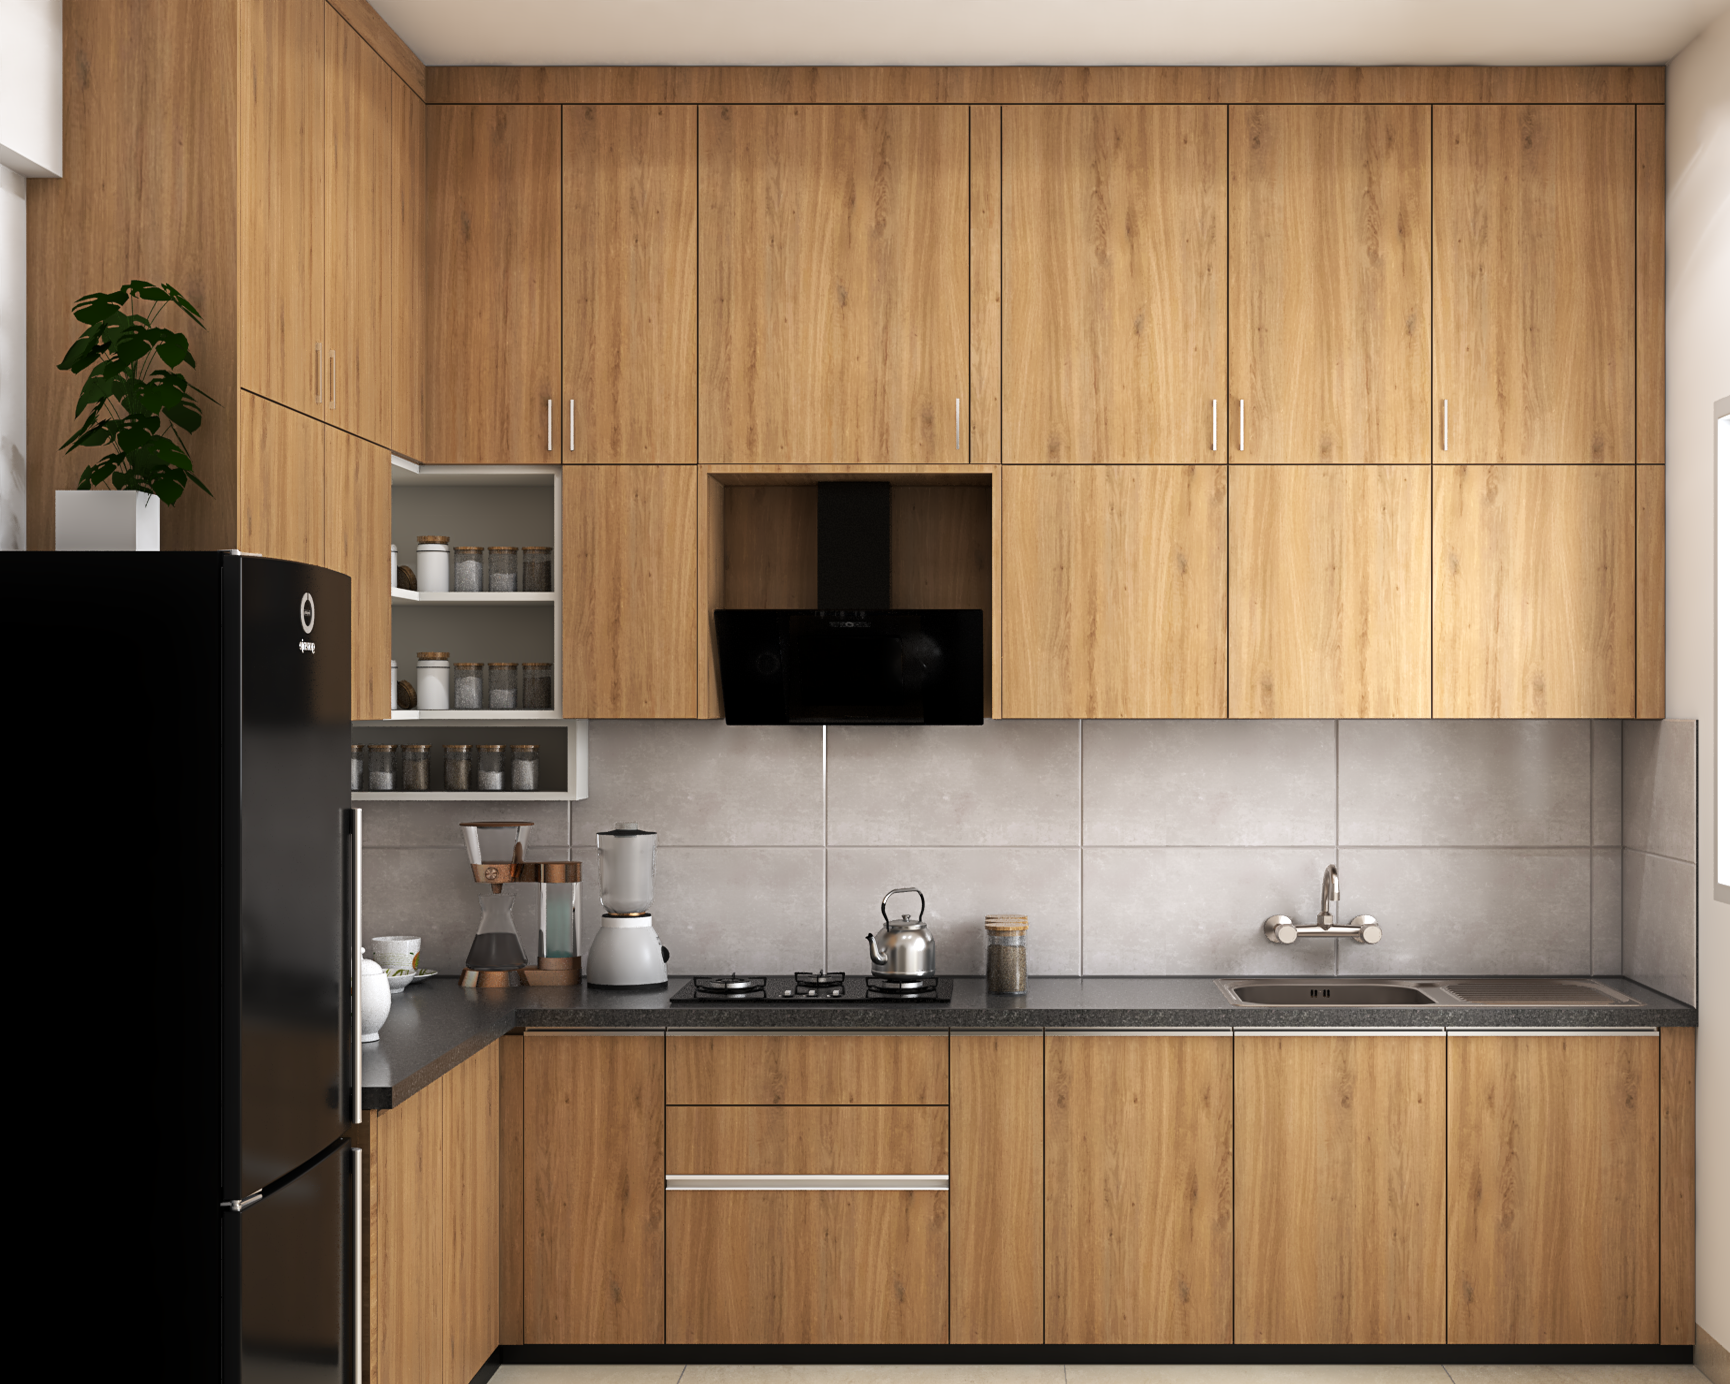 Industrial Wooden Kitchen Design With Dado Tiles